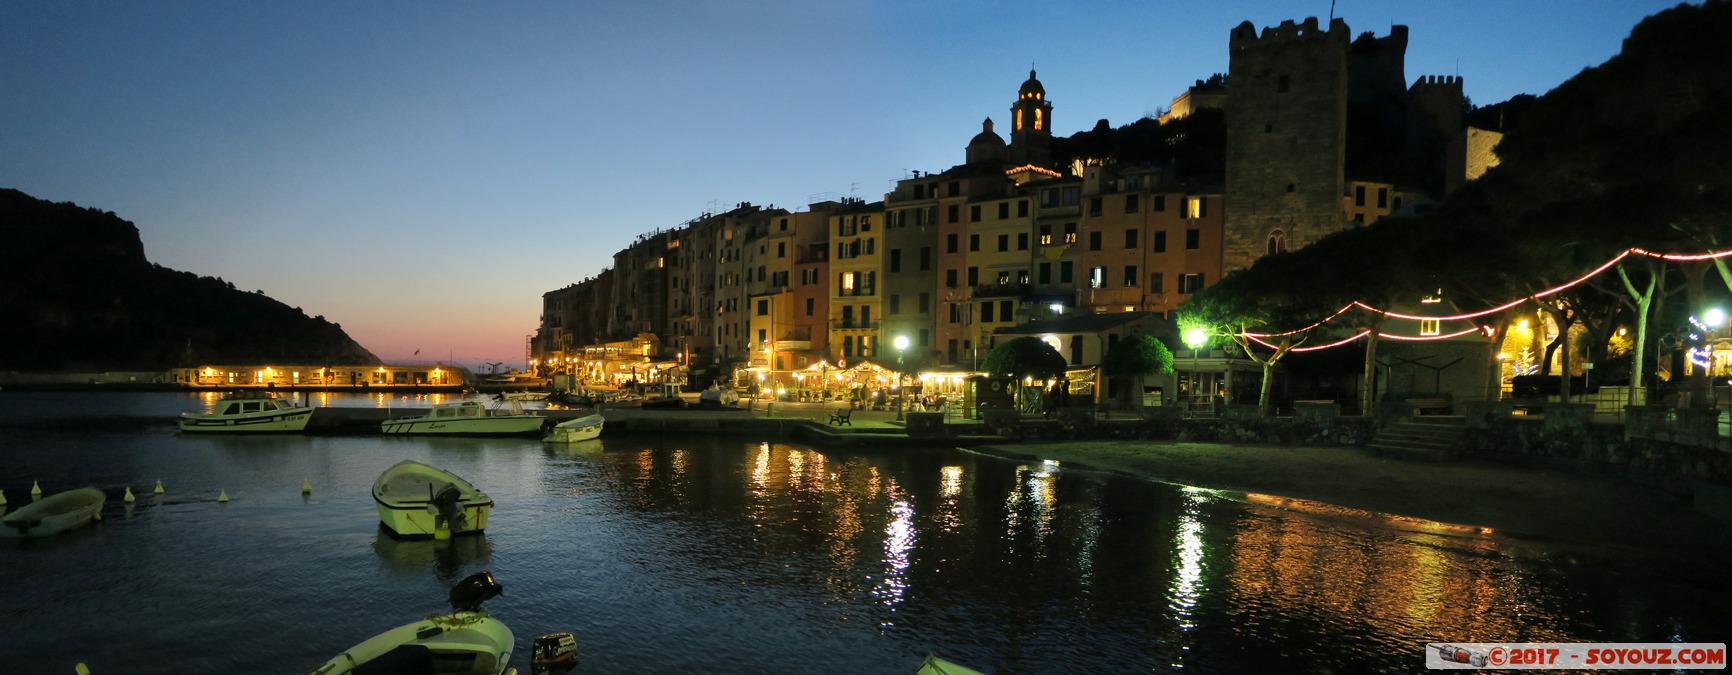 Portovenere by night - panorama
Mots-clés: ITA Italie Liguria Portovenere patrimoine unesco Mer Nuit panorama Port